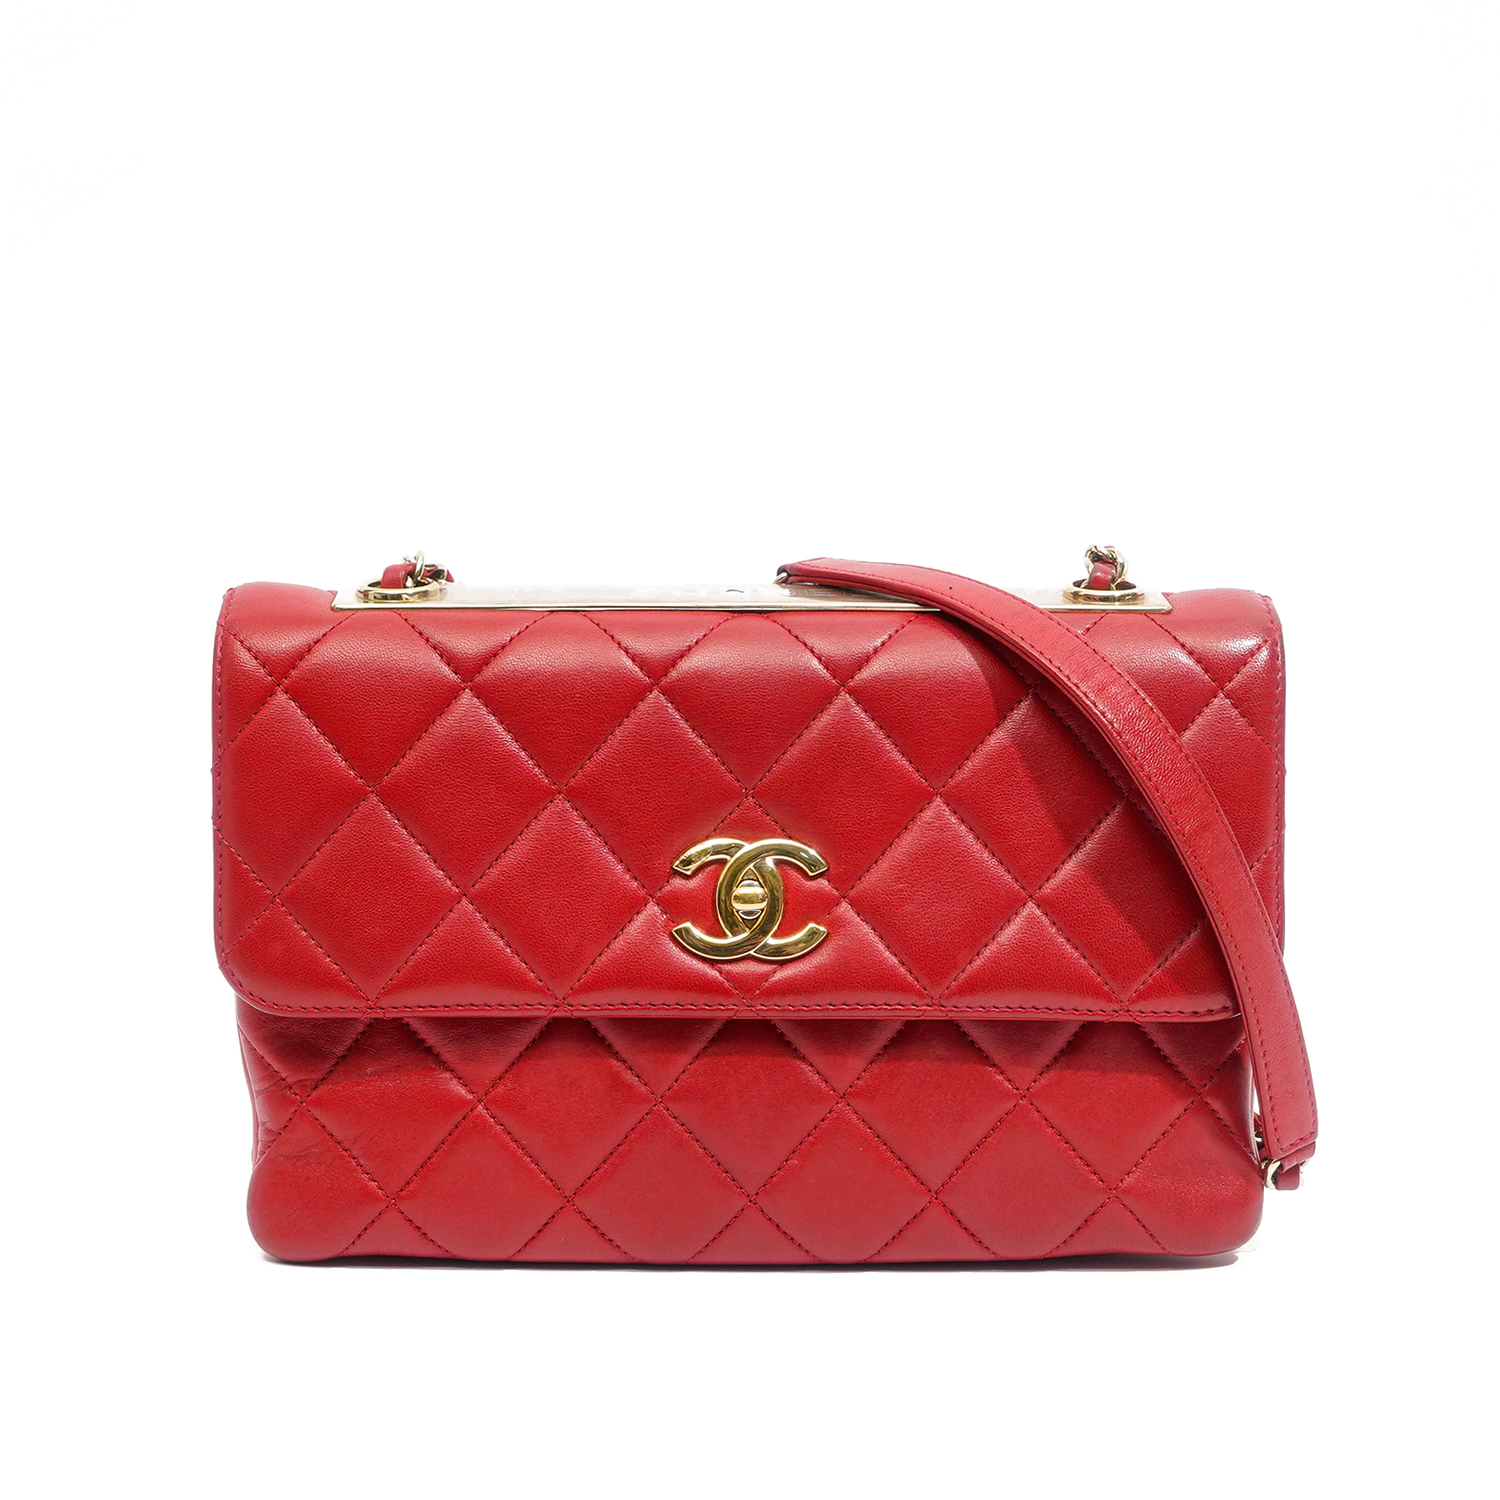 Chanel Trendy CC Top Handle Shoulder Bag COMPLETE 22B  MINT CONDITION   eBay